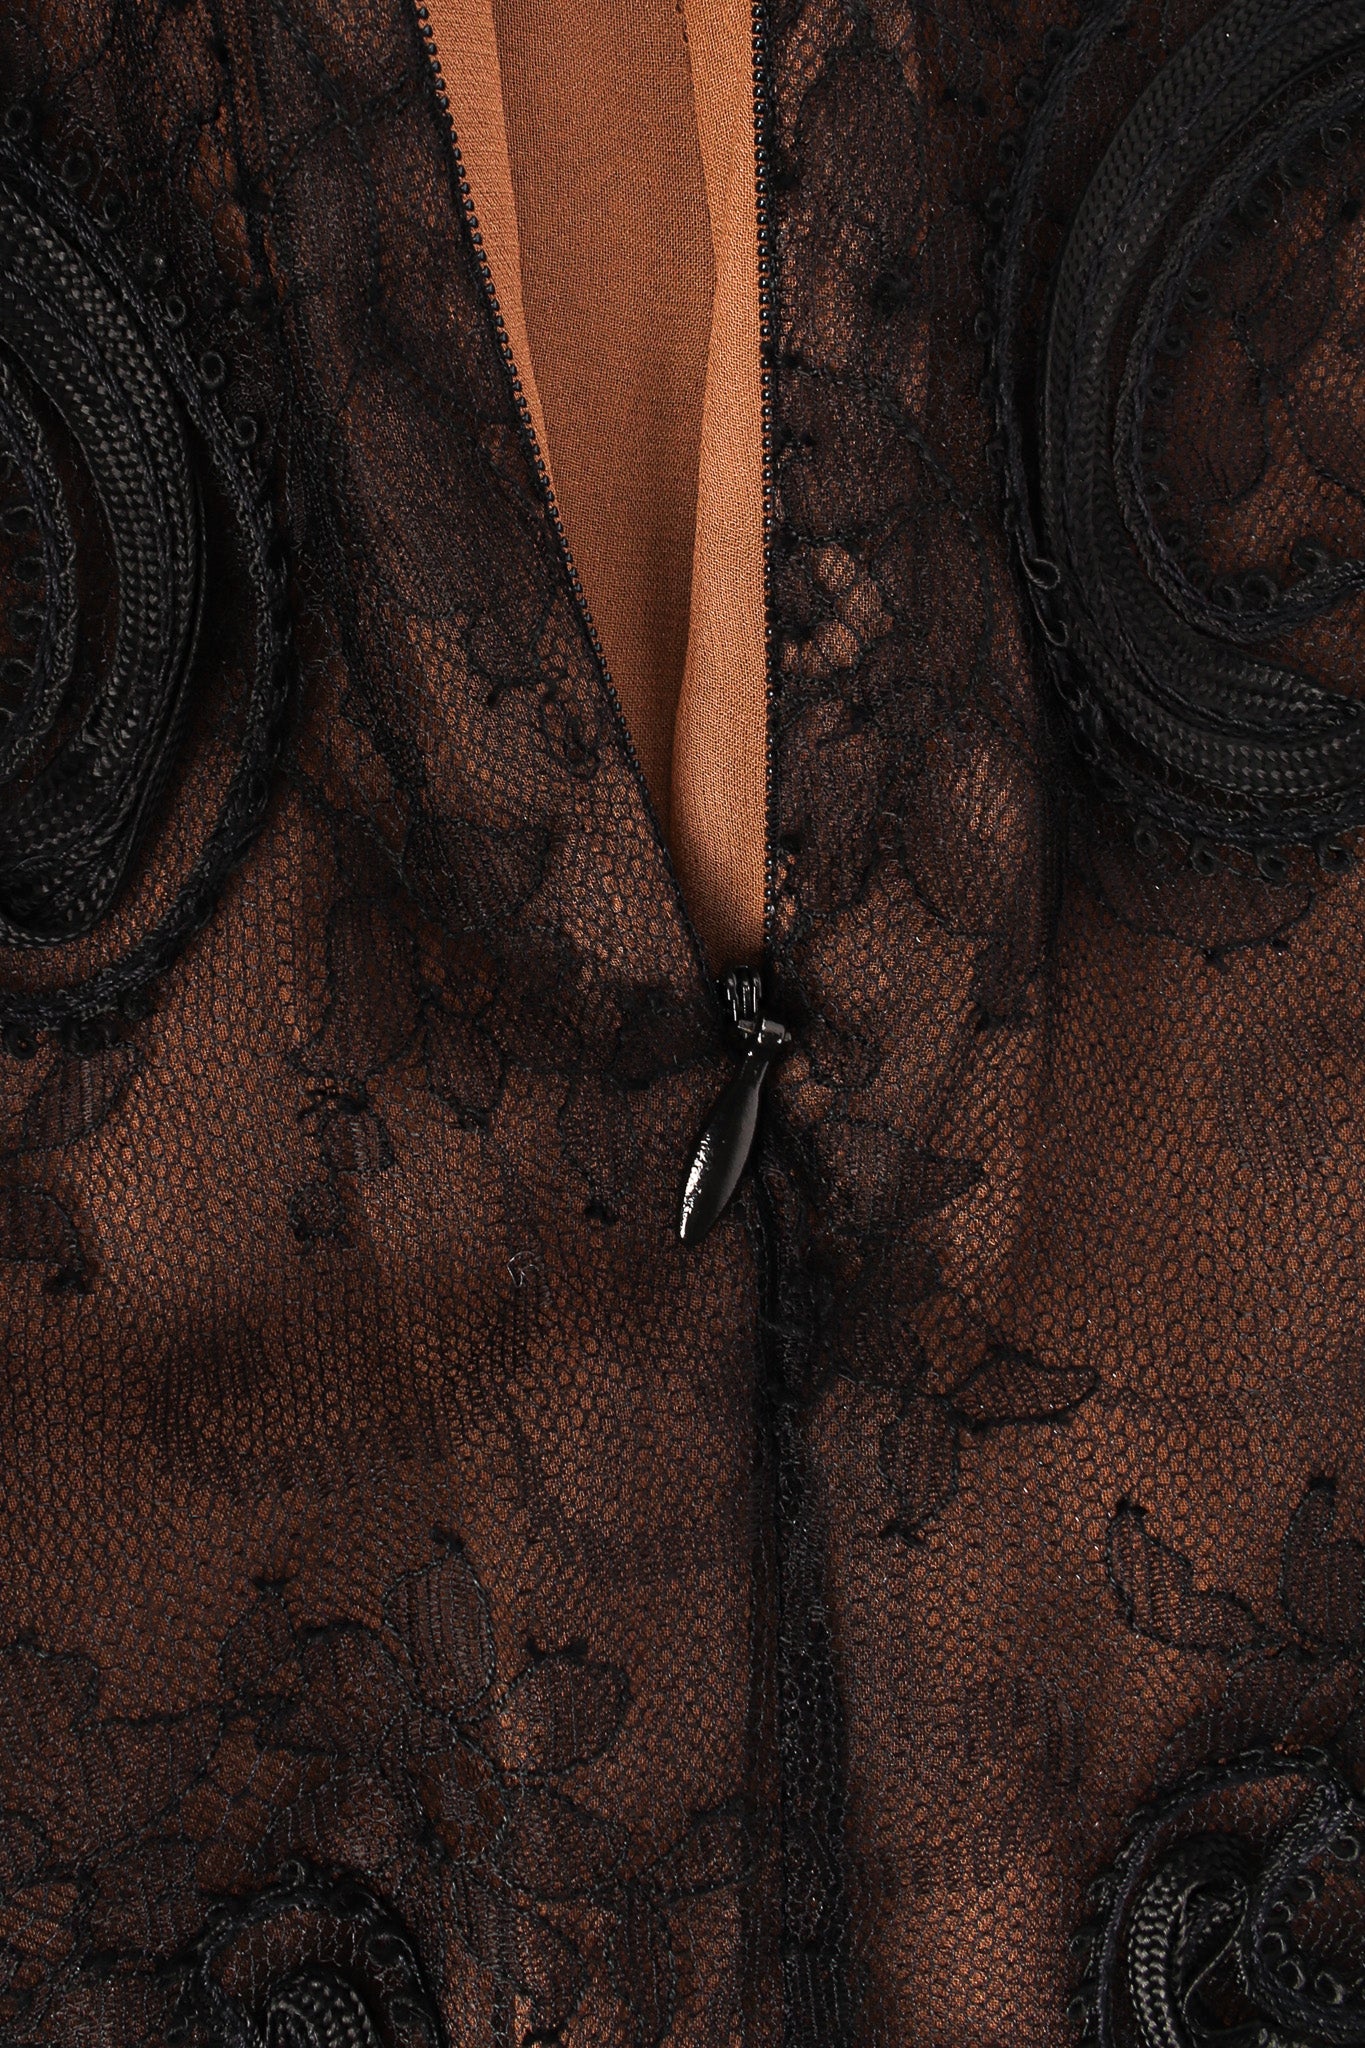 Vintage Oscar de la Renta Soutache Chantilly Lace Ruffle Dress back zipper @ Recess LA